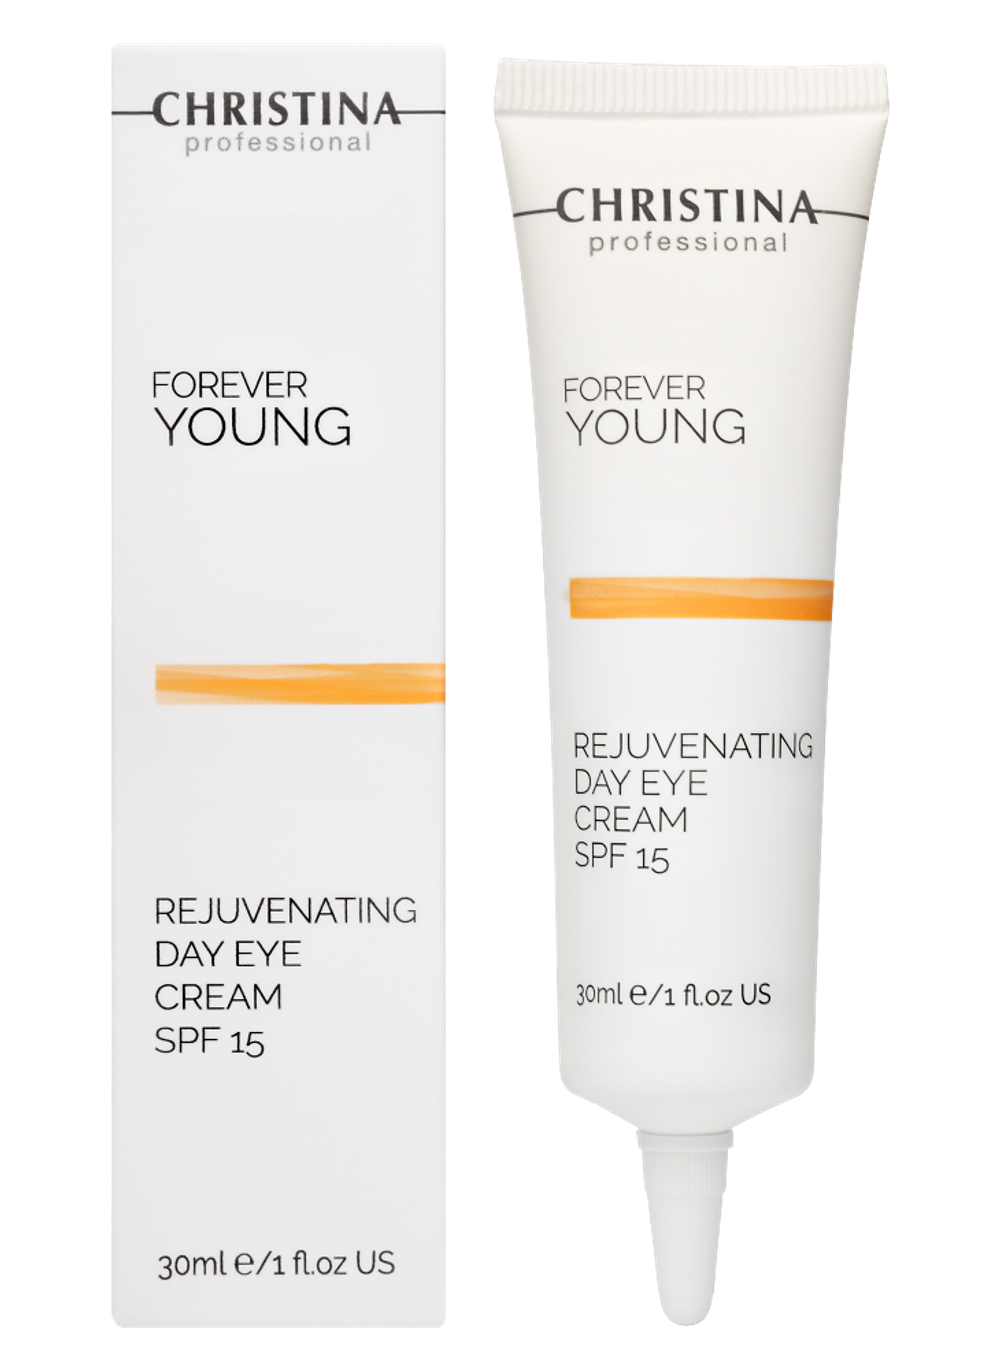 CHRISTINA Forever Young Rejuvenating Day Eye Cream SPF 15